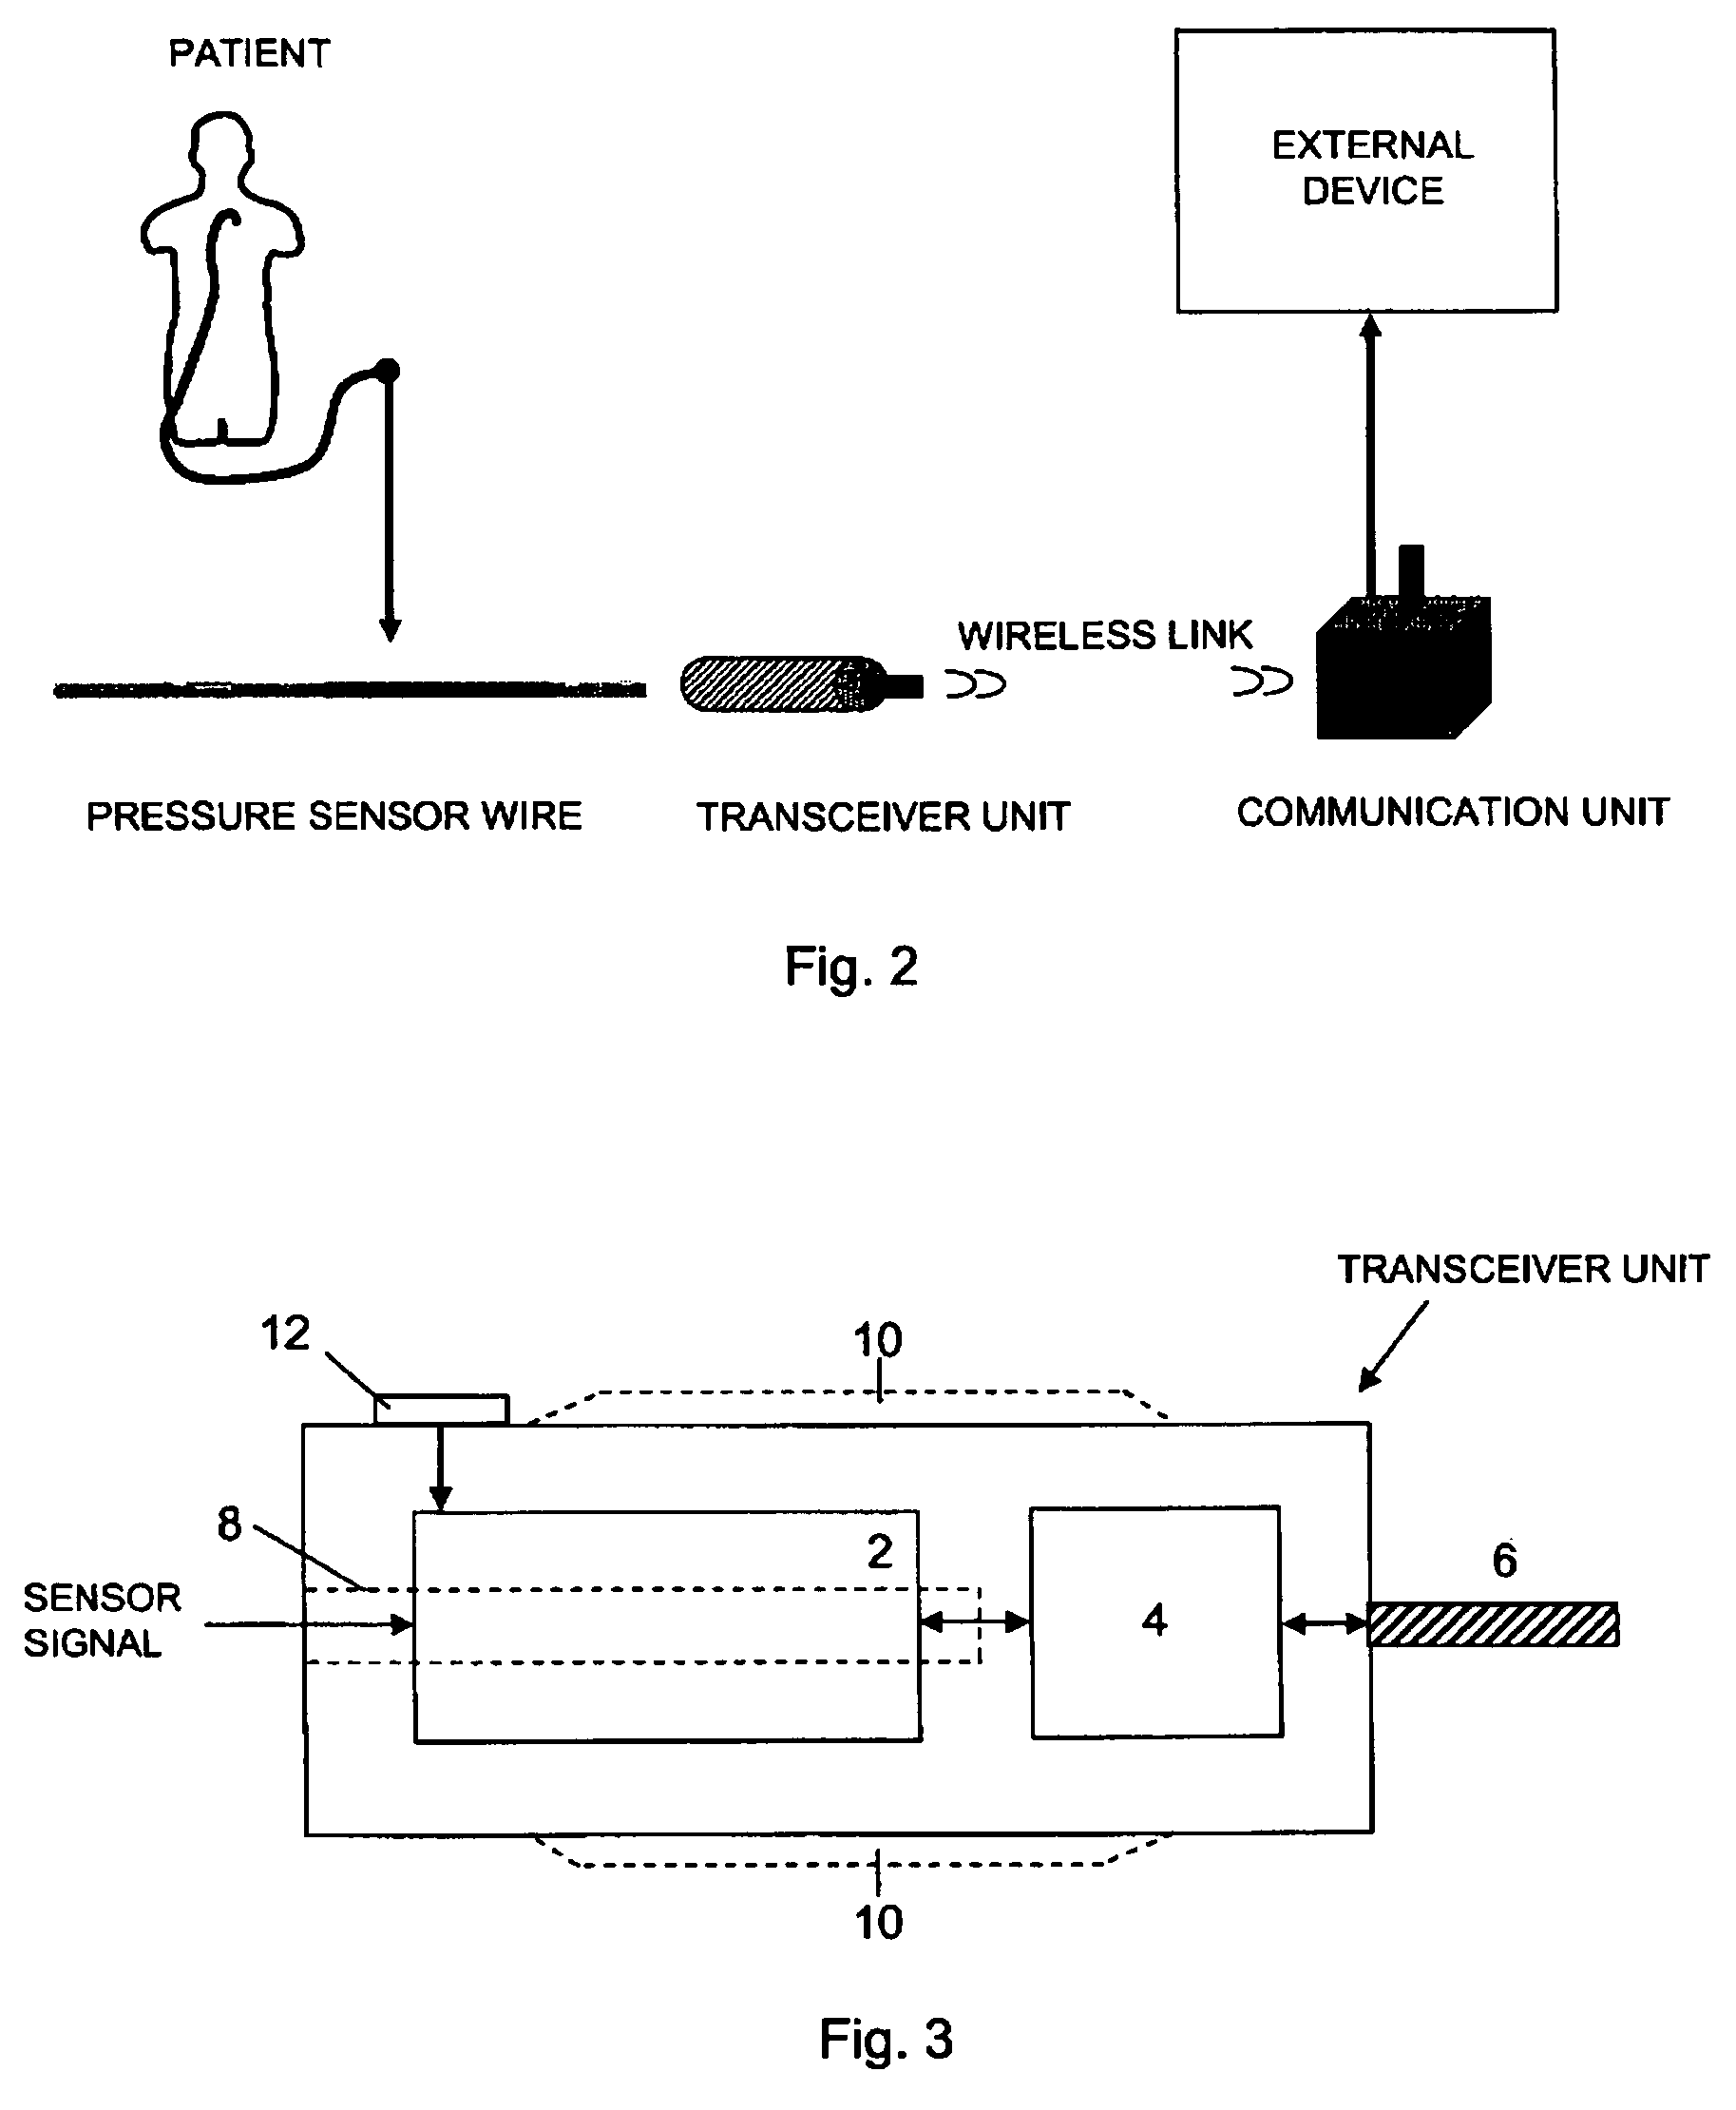 Transceiver unit in a pressure measurement system